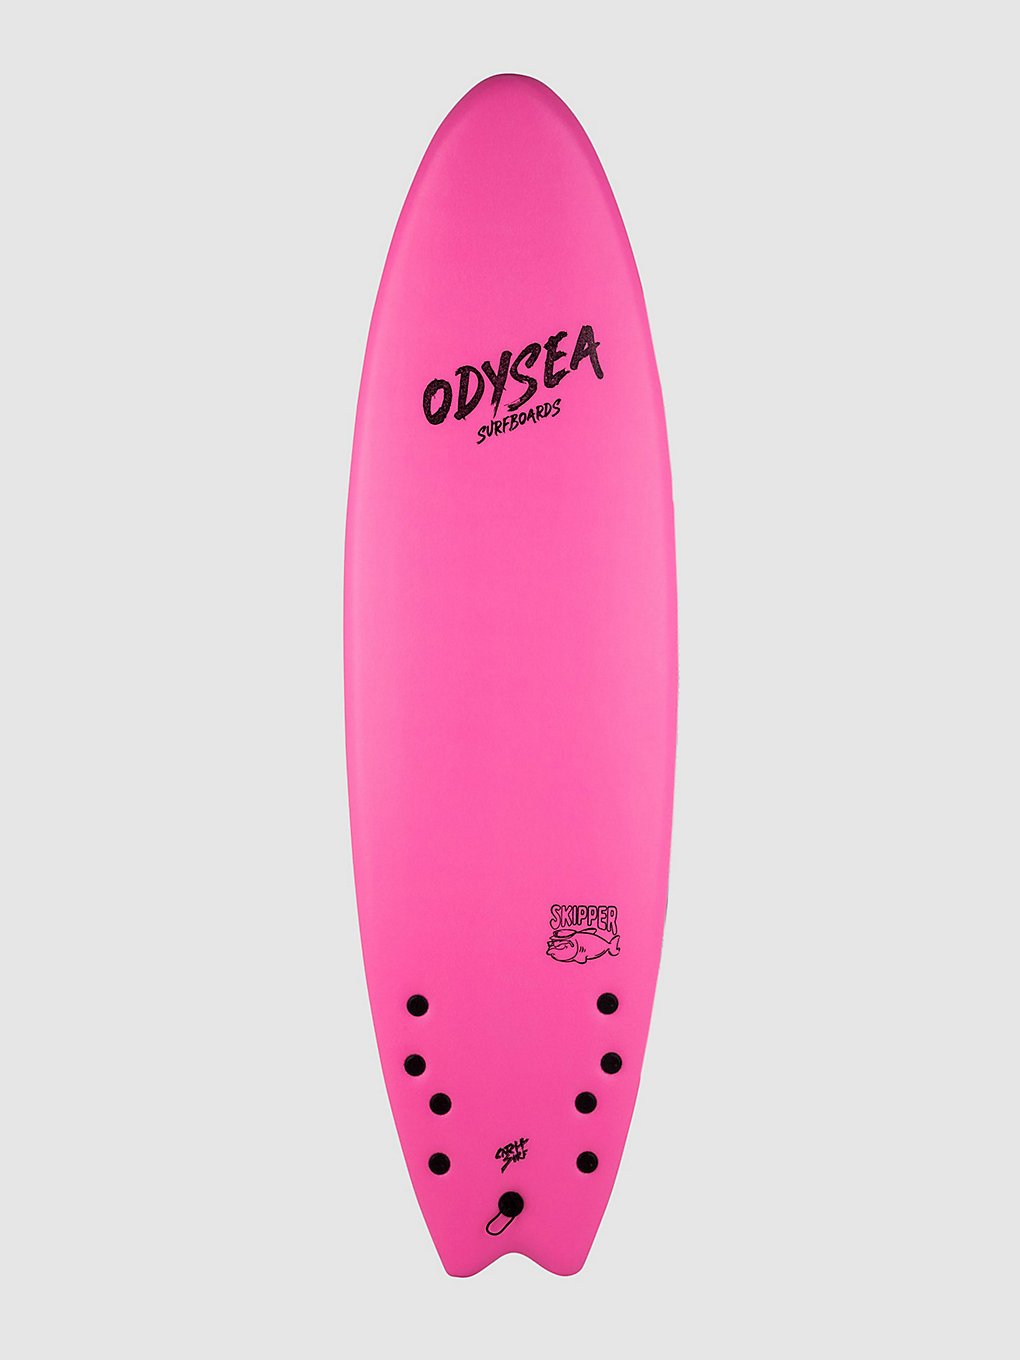 Catch Surf Odysea Skipper Pro Job Quad 6'6 Softtop Surfboard hot pink 20